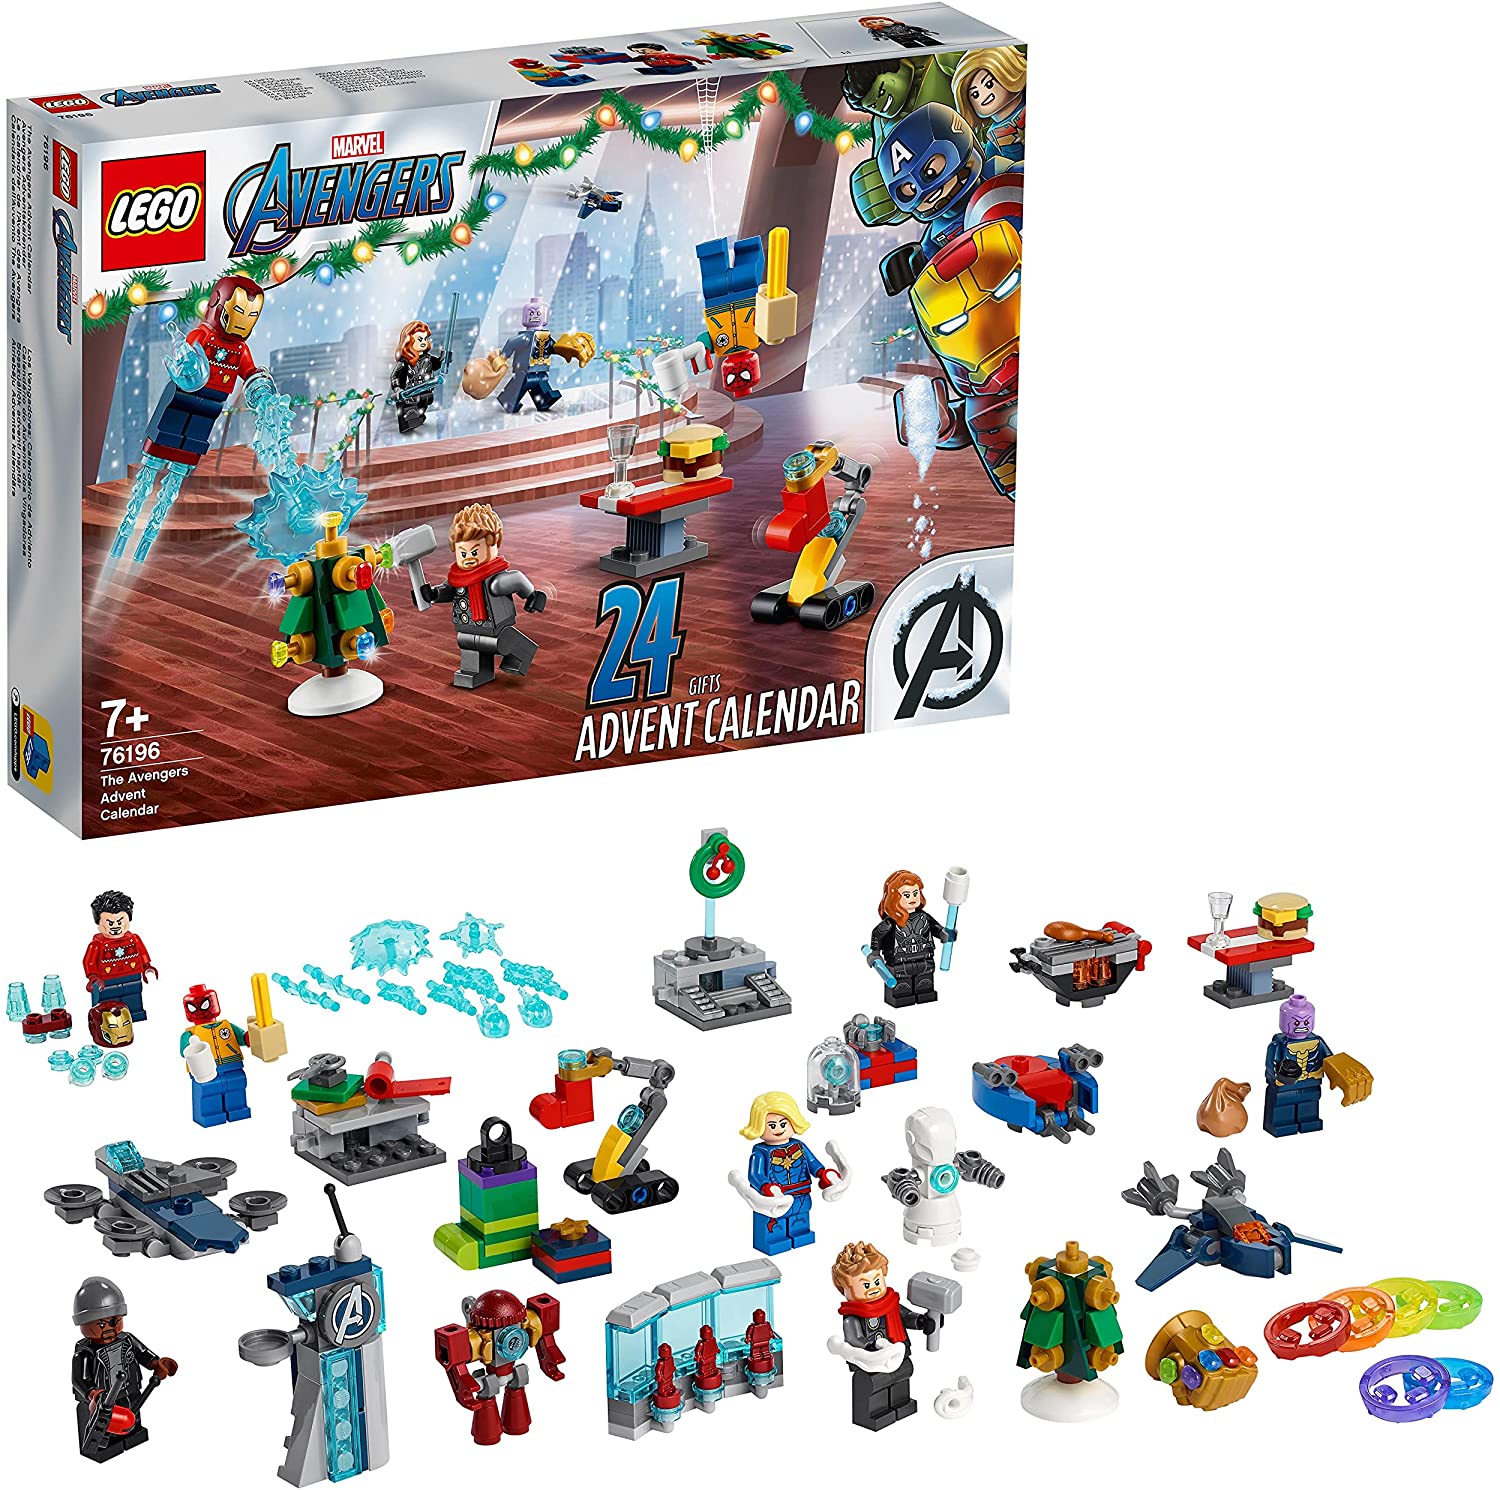 LEGO 76196 Marvel Avengers Advent Calendar 2021 Christmas Calendar with Spi